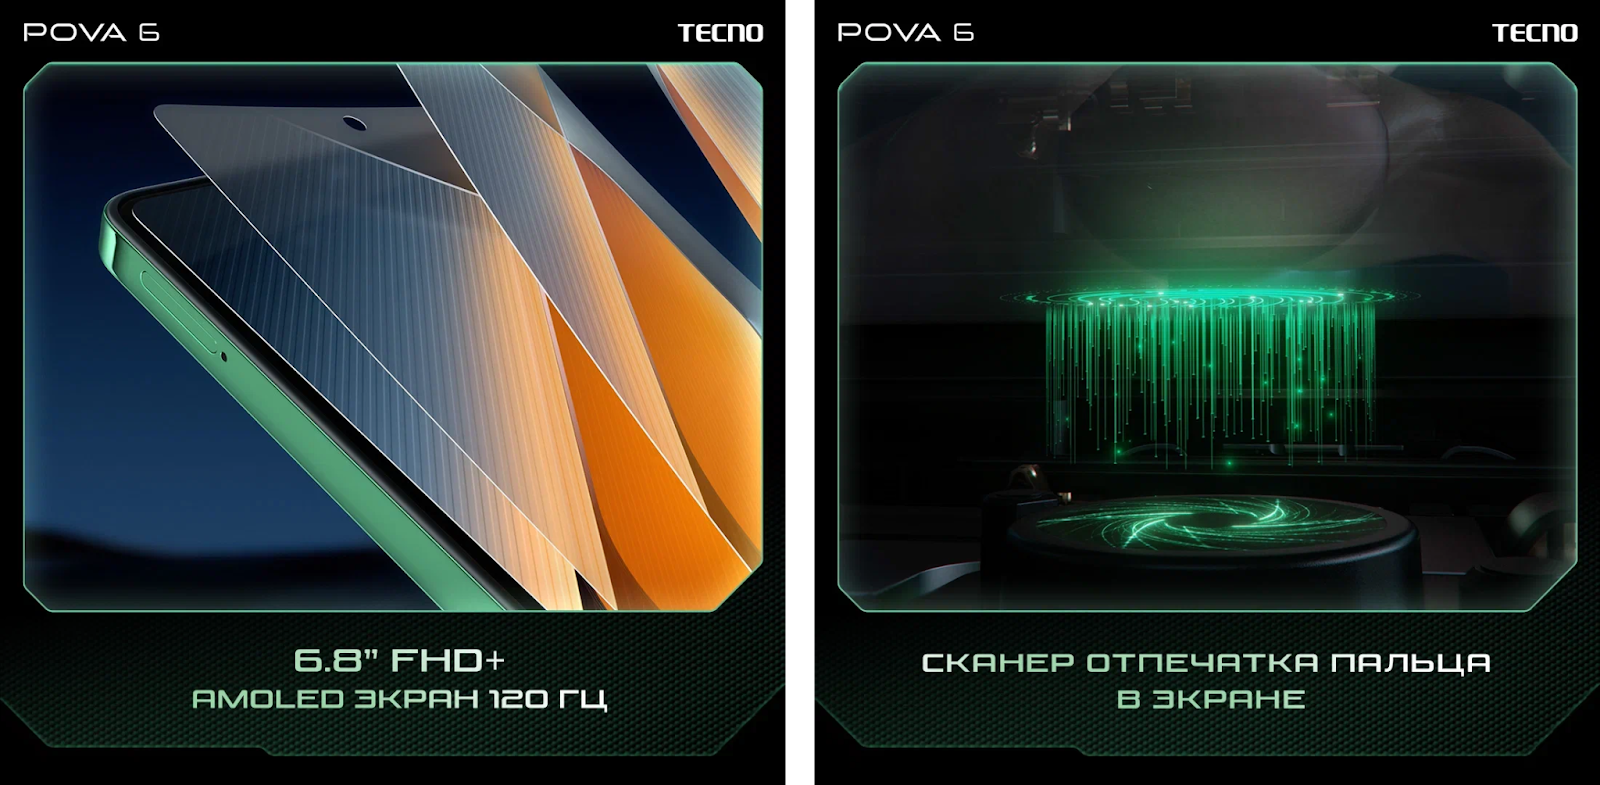 Tecno представил новые модели серии POVA 6 (M83hlzM7LTtxZocxEDCI9XipWH2mHq7WtOsRvGBhCyYOQCiLDD6fFfDk6mhWLhPt2ZN73nw2O9wqamuwcVGjzkZt4P0dbPWYX1fbrL24gNCbTJKZy miXKRl 05 p6pMJYaCcD5sOeVa02A0j 8mgJ8)